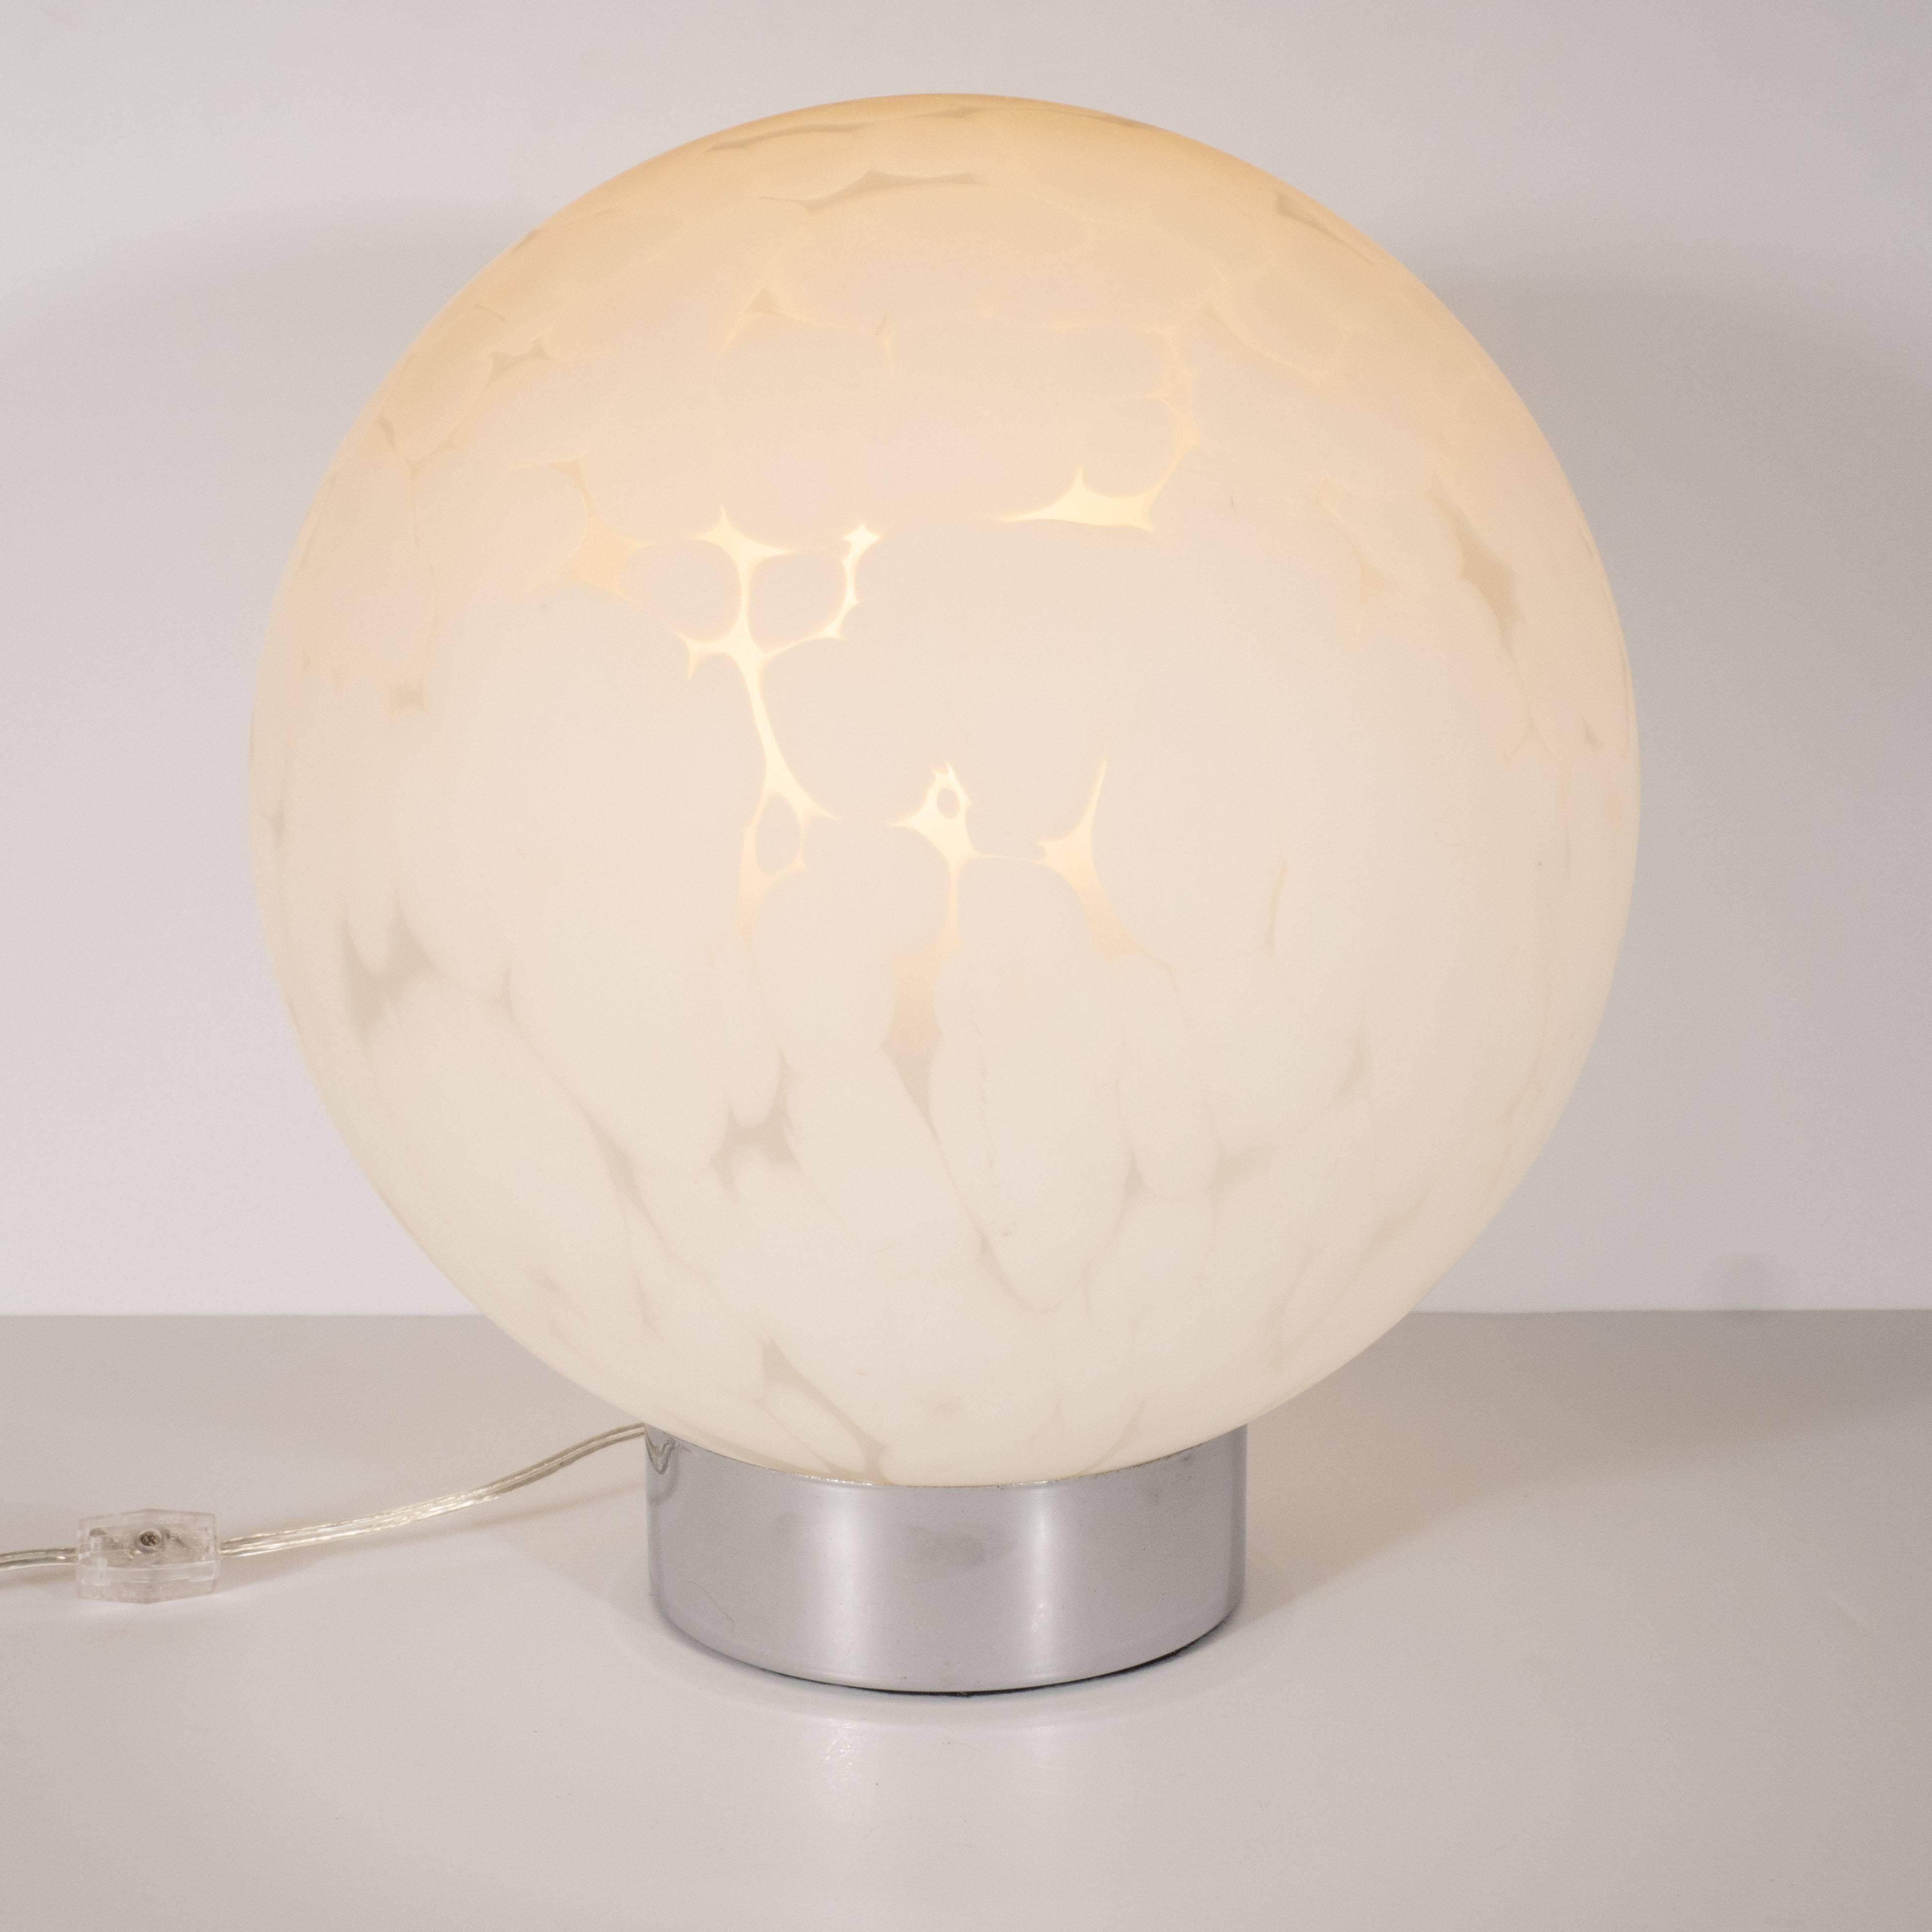 Late 20th Century Midcentury Handblown Murano Cumulus White Glass Orbital Lamp with Chrome Base